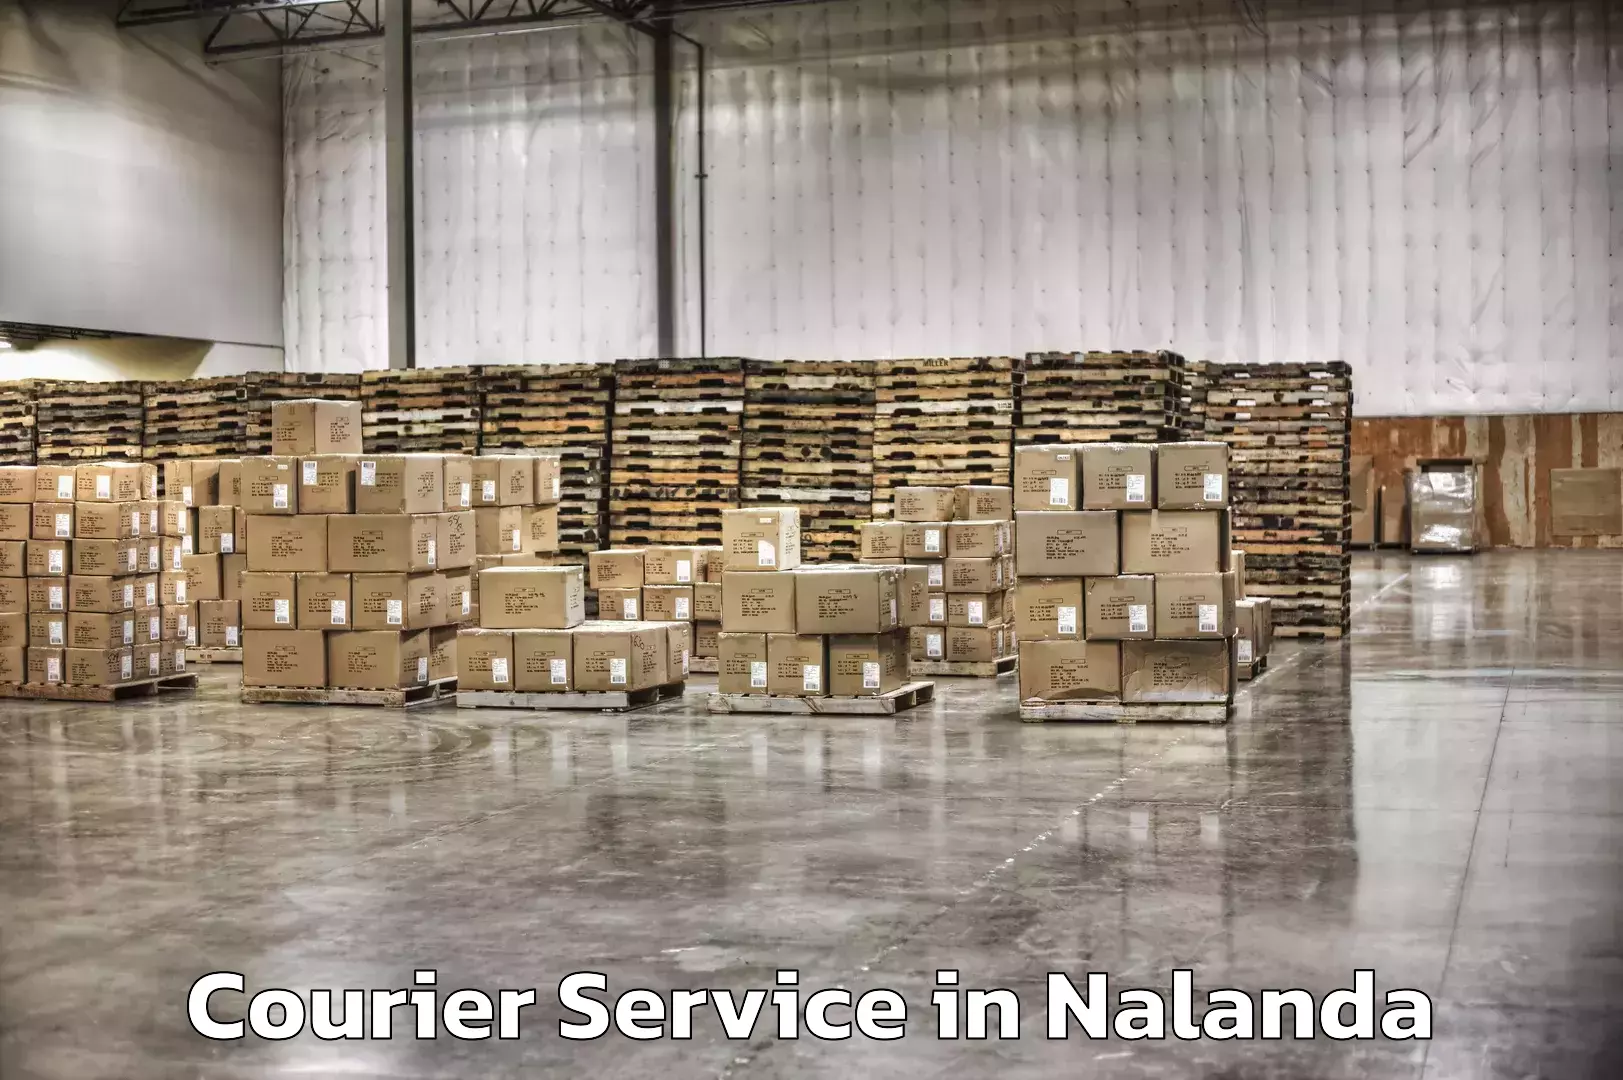 Short distance delivery in Nalanda